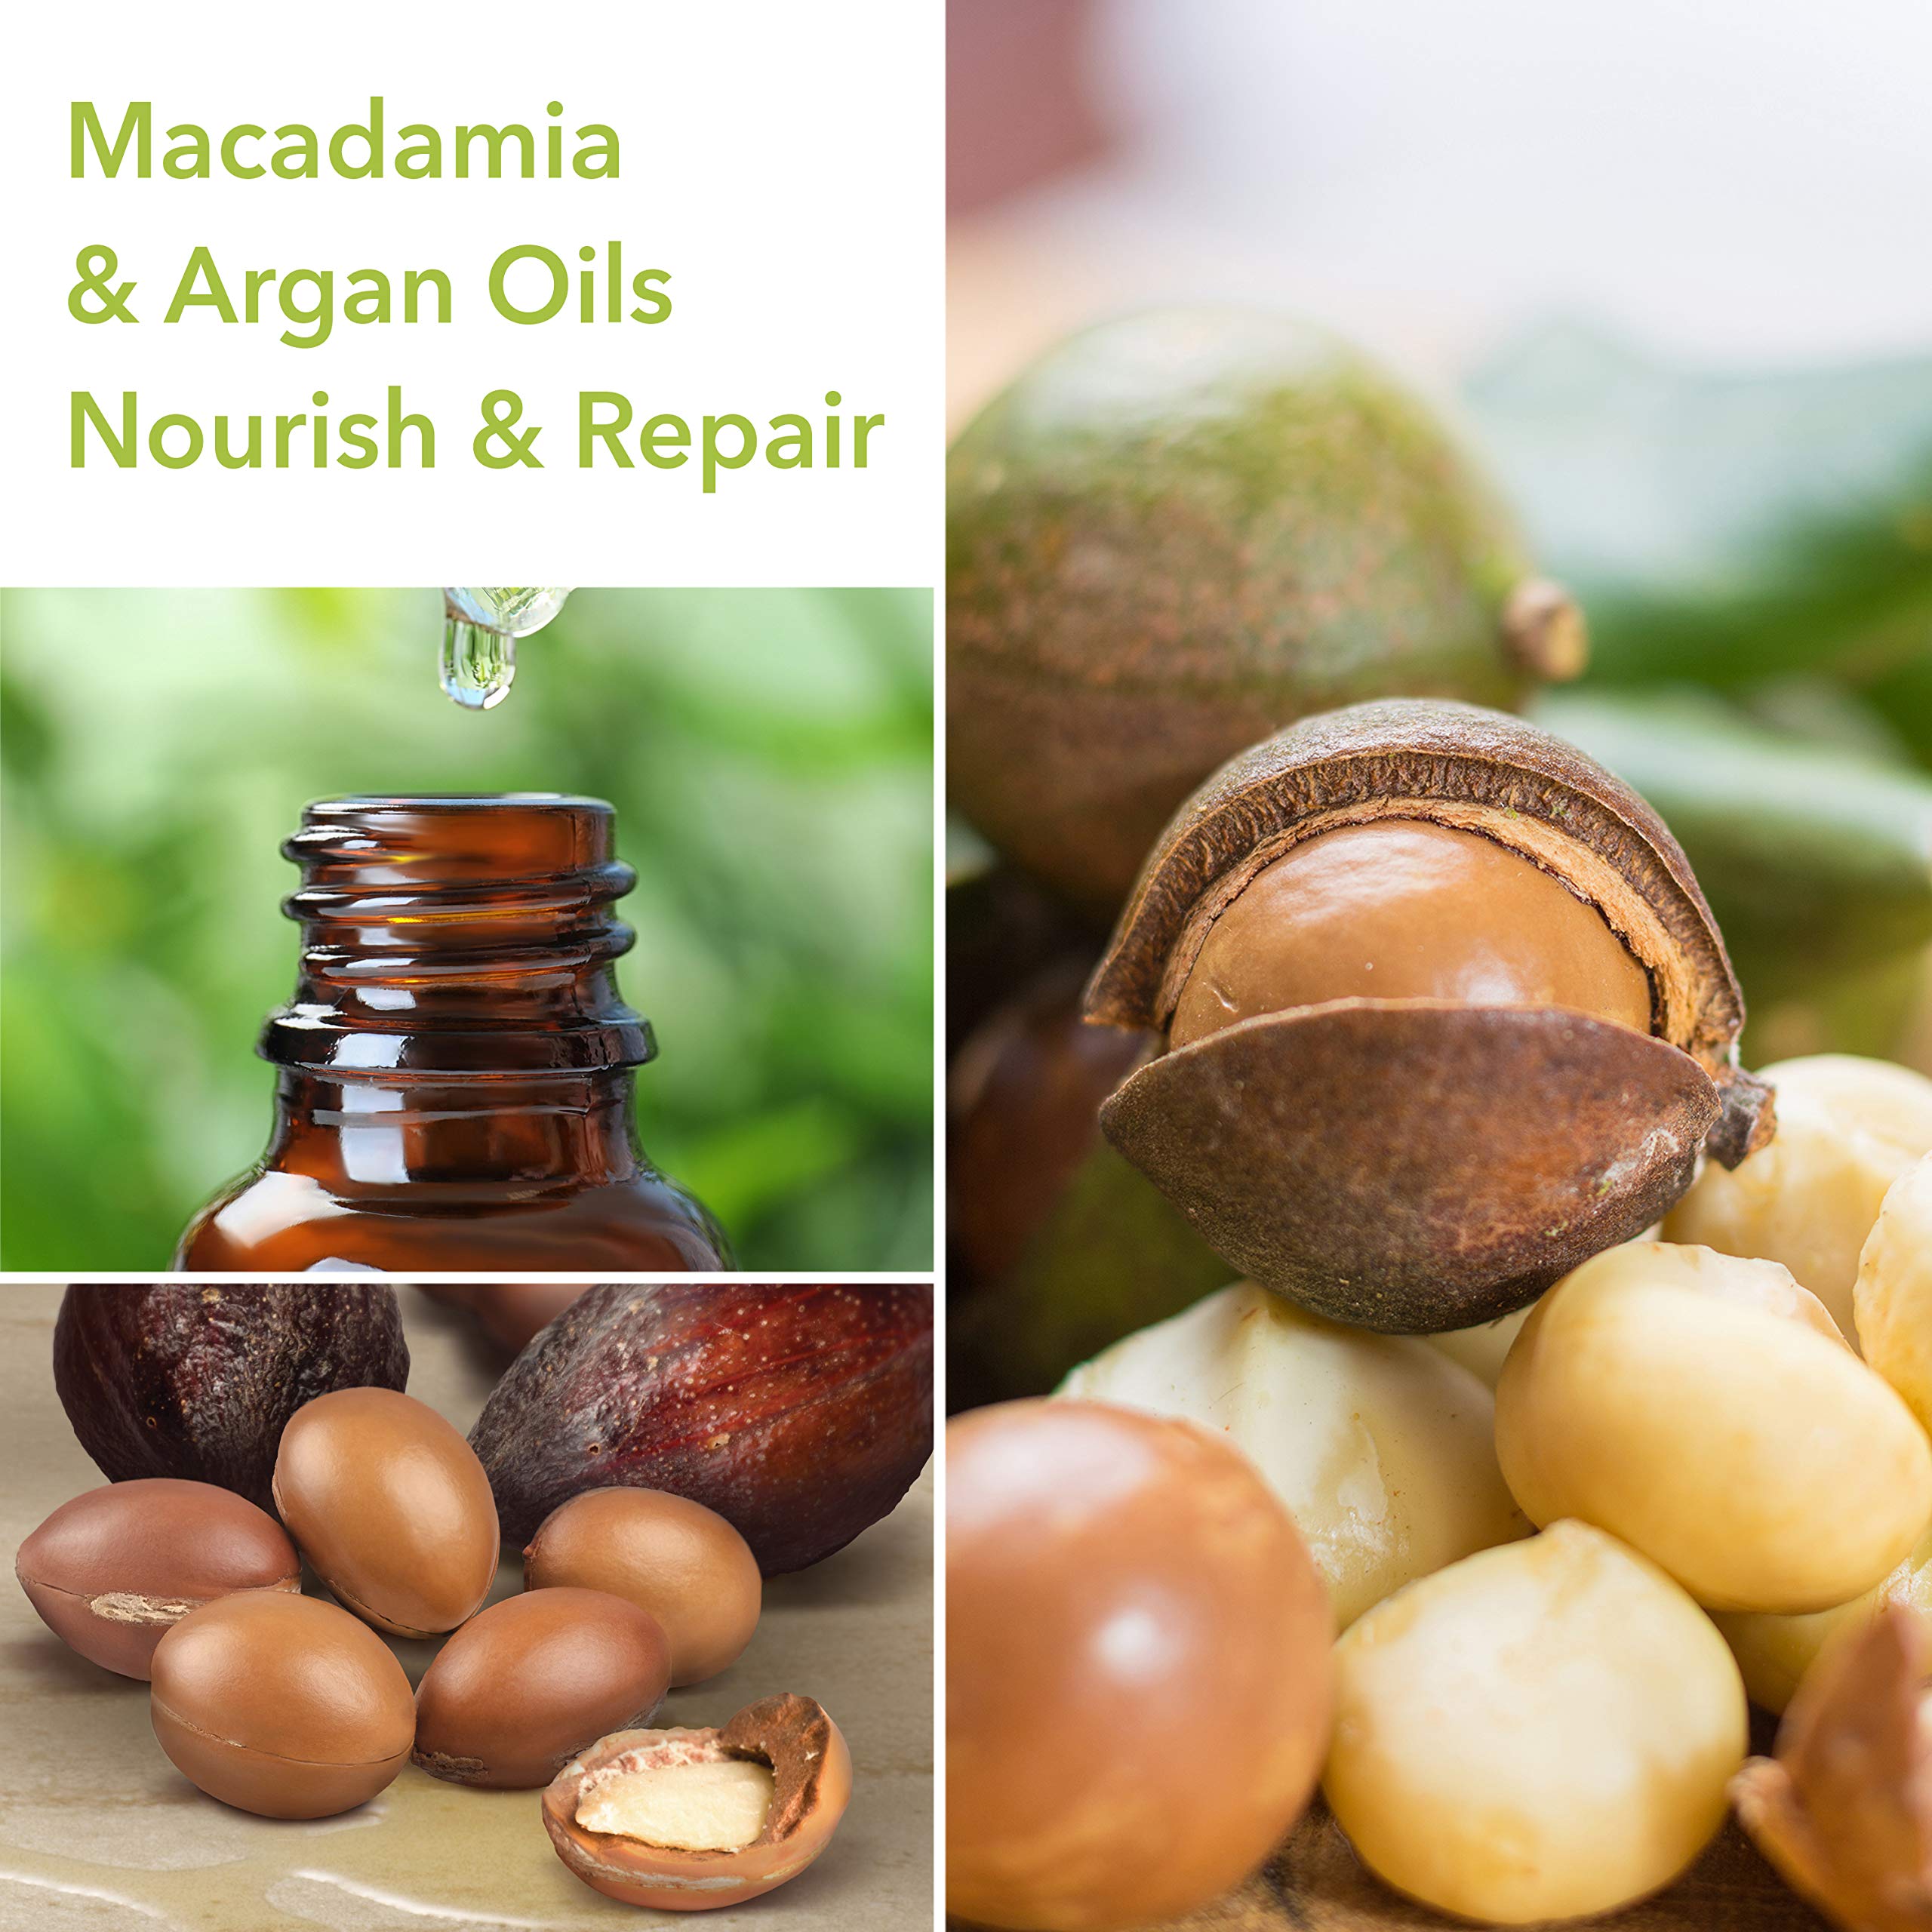 Macadamia Professional Hair Care Sulfate & Paraben Free Natural Organic Cruelty-Free Vegan Hair Products Nourishing Repair Hair Conditioner, 33.8 oz, Green